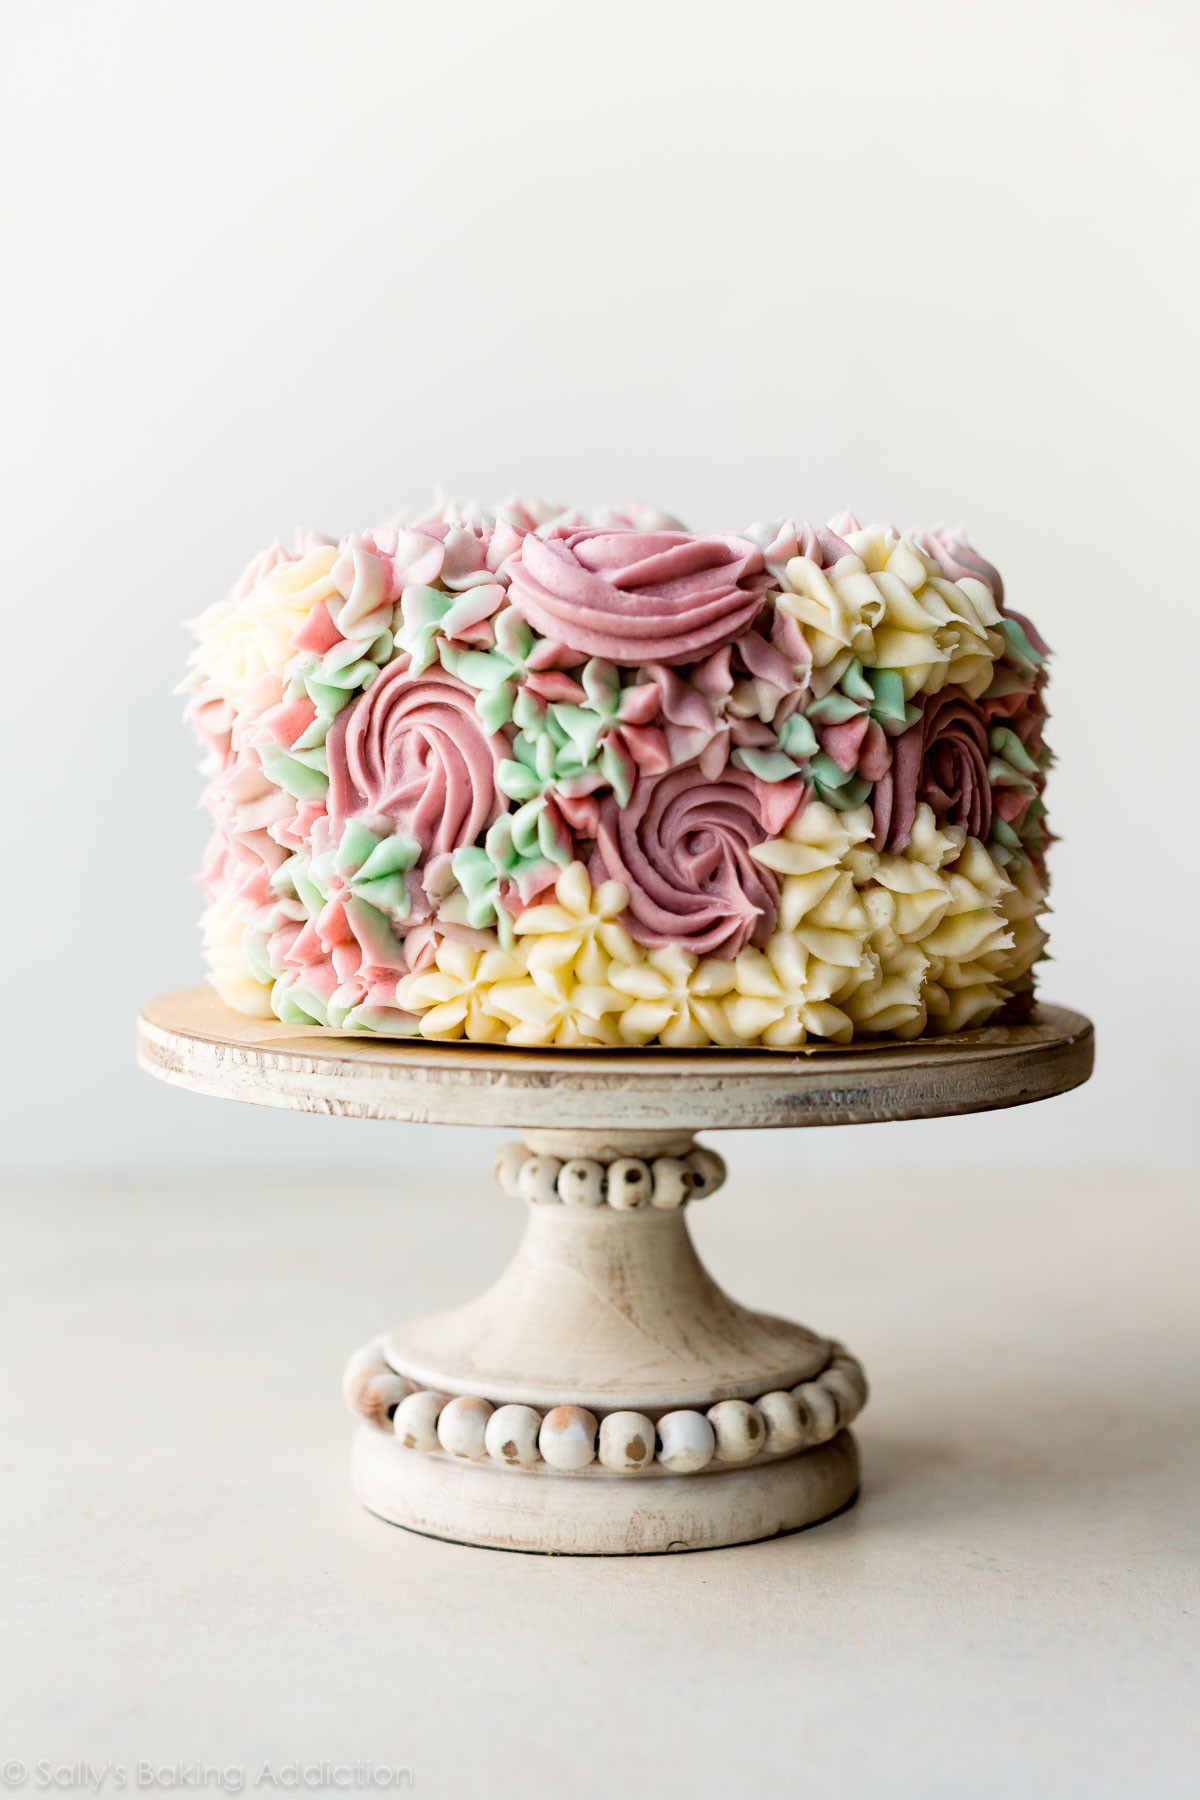 How To Decorate Birthday Cake
 6 Inch Birthday Cake Decorating Video